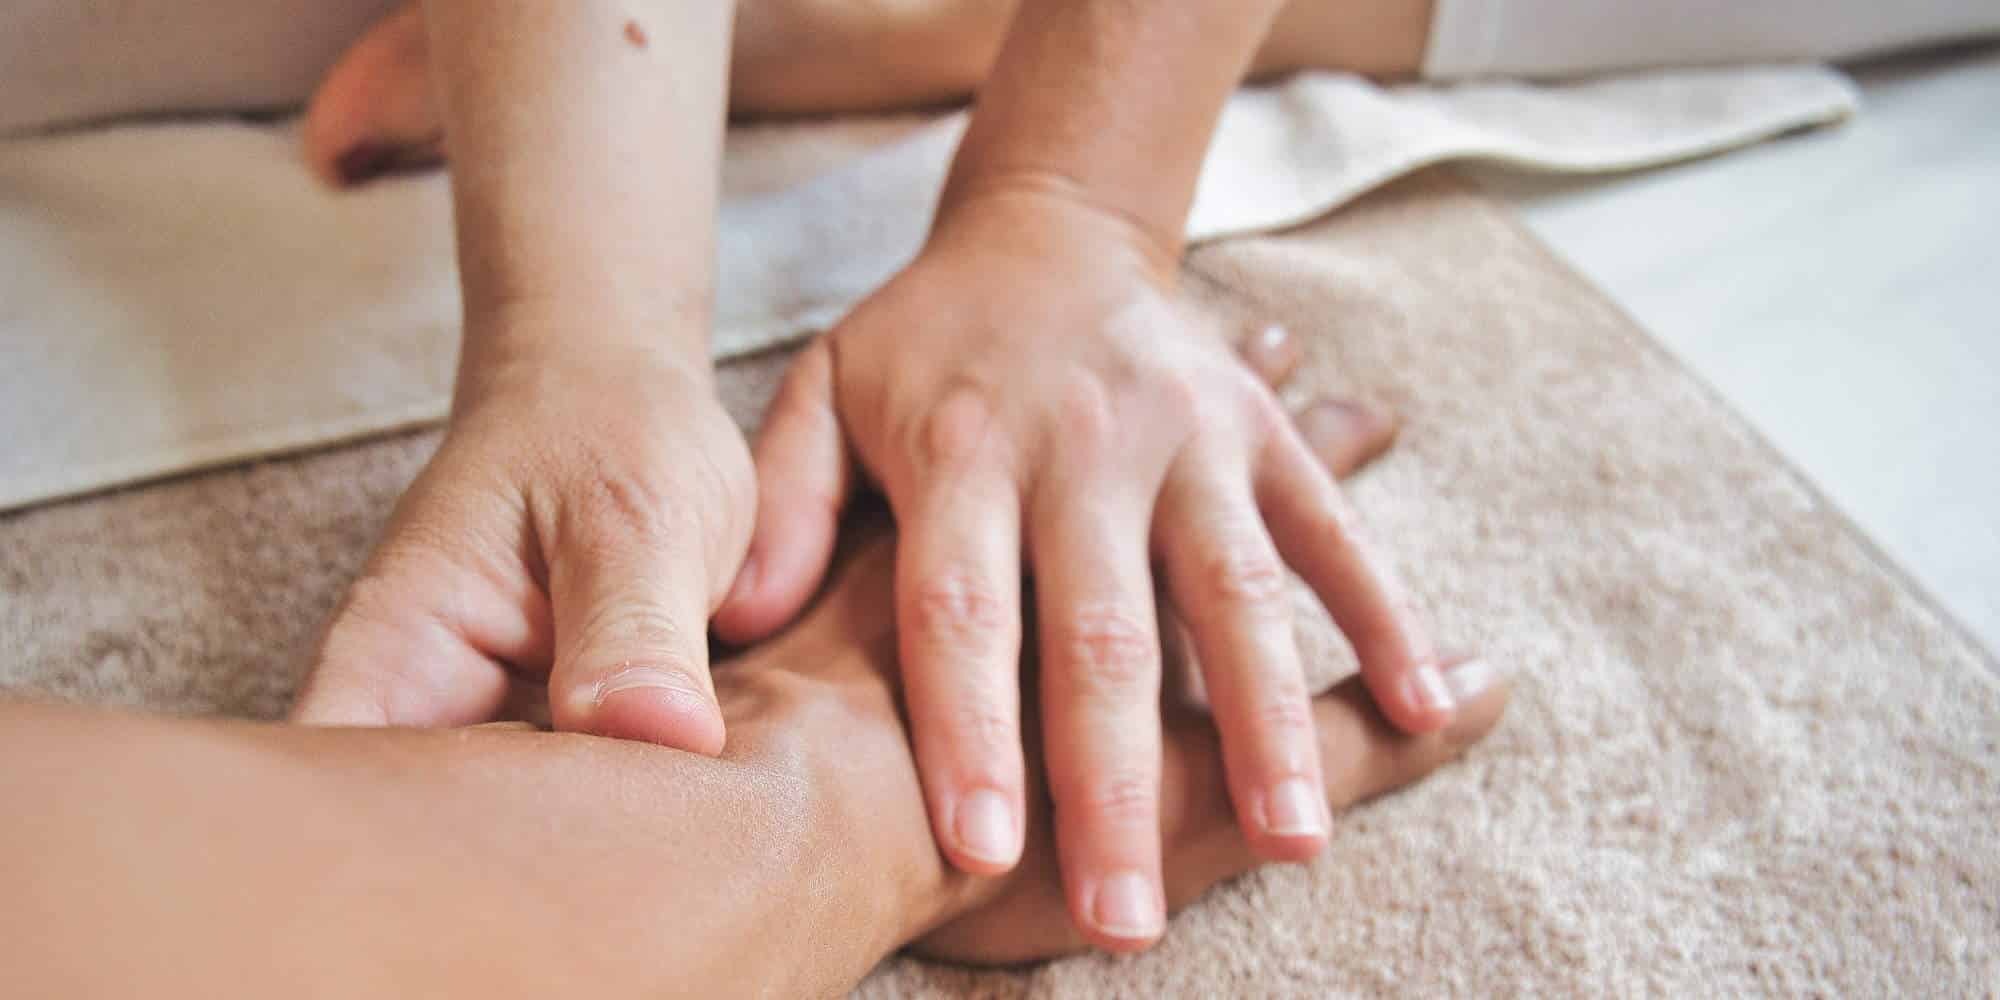 pieseis akra massage - Το ταϊλανδέζικο μασάζ δεν έχει καμιά σχέση με όσα γνωρίζεις - Μια ανατολίτικη θεραπεία χιλιετιών, βασισμένη στη συσσωρευμένη γνώση βουδιστών μοναχών